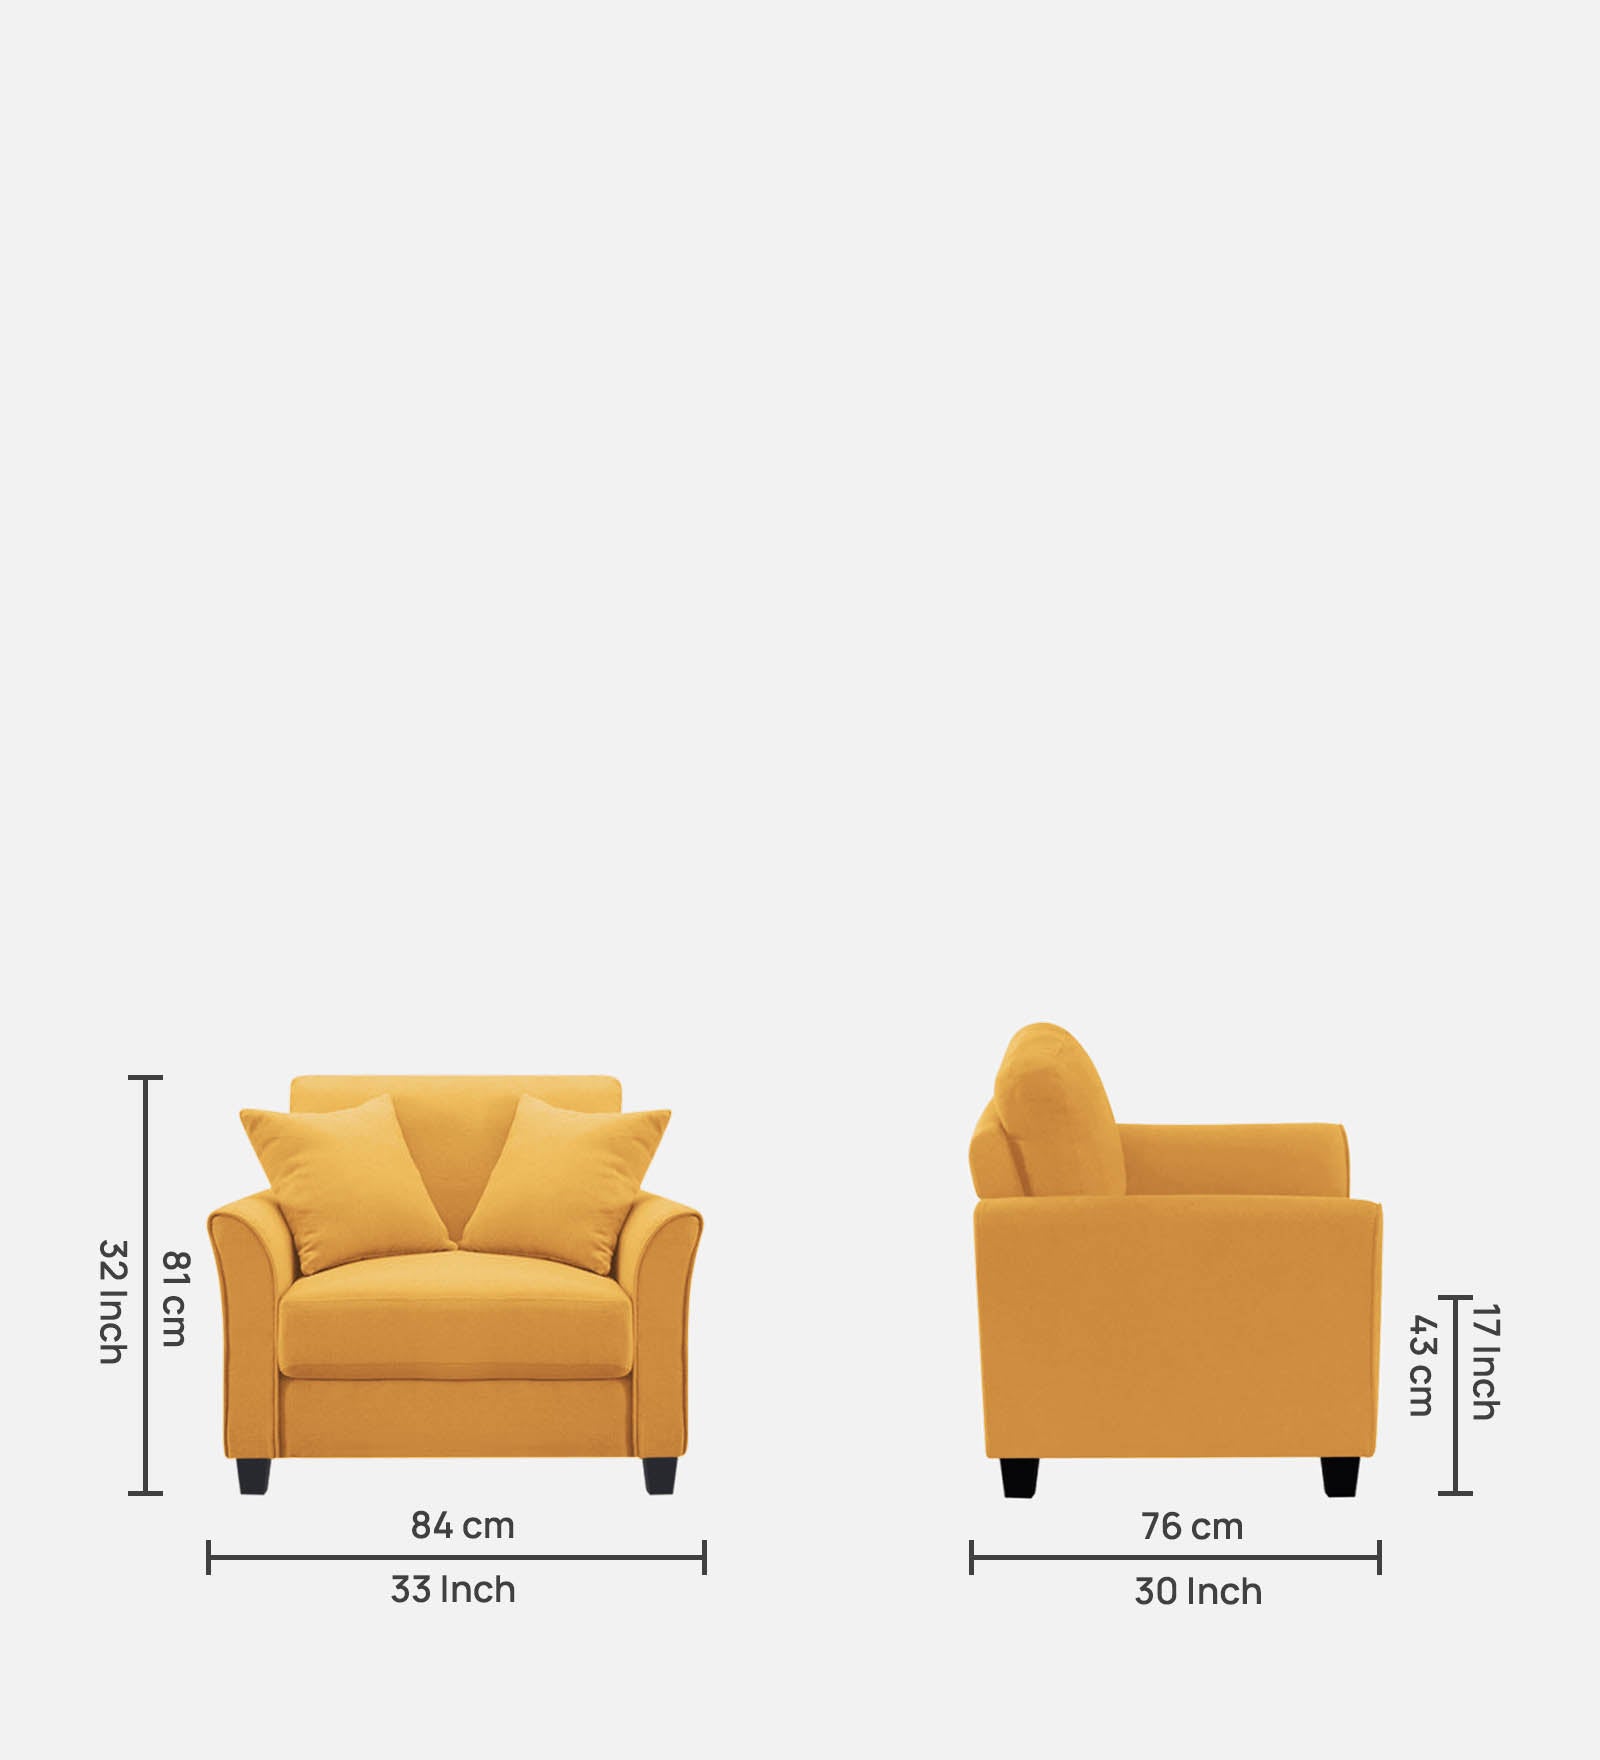 Daroo Velvet 1 Seater Sofa in Turmeric yellow Colour